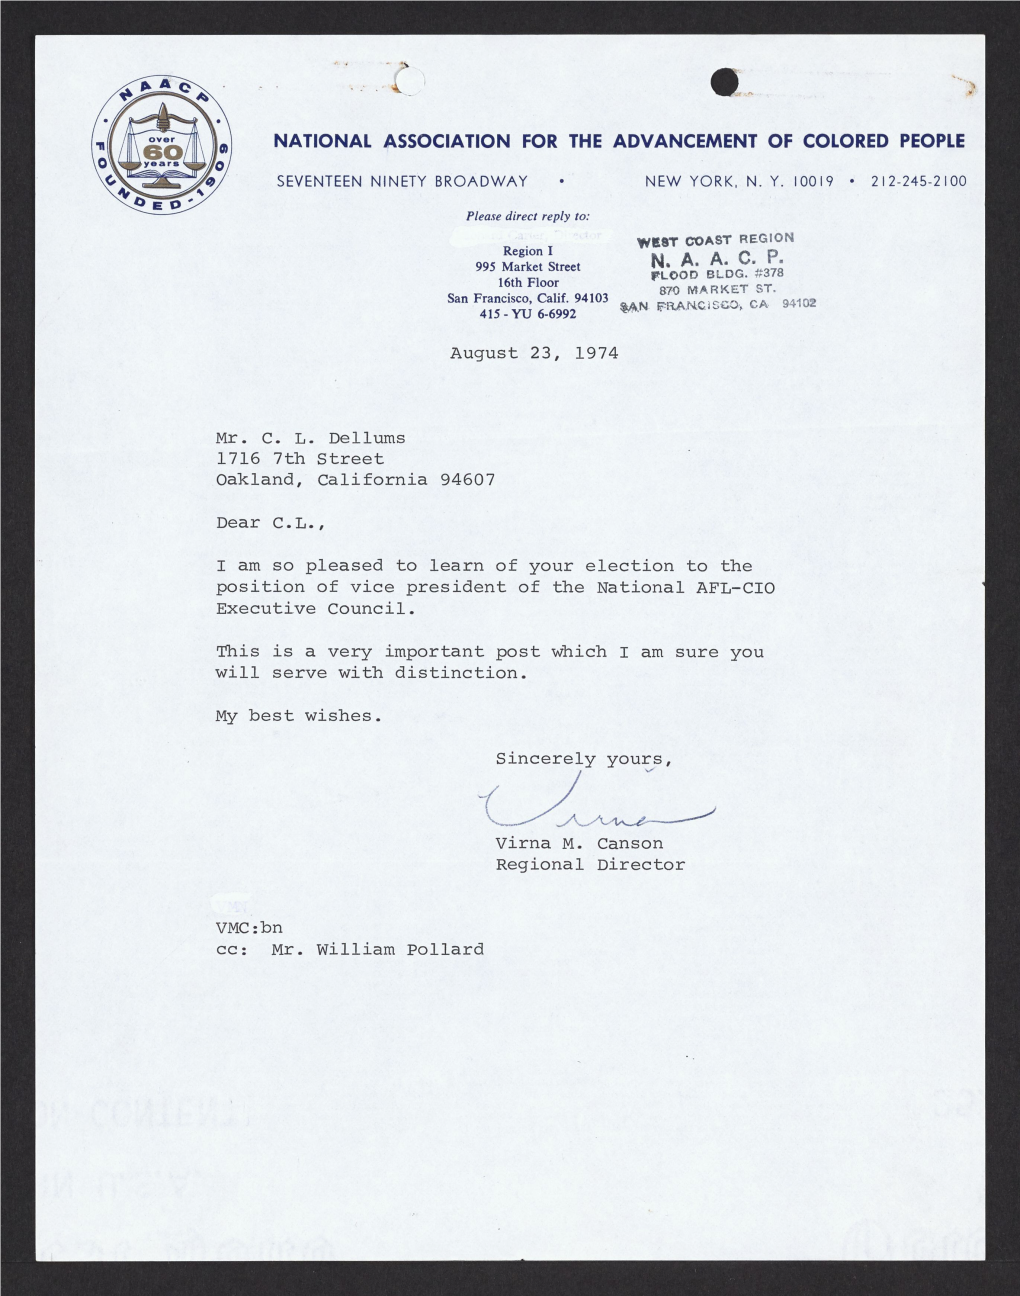 C.L. Dellums' Letters of Congratulations Upon Becoming AFL-CIO Vice